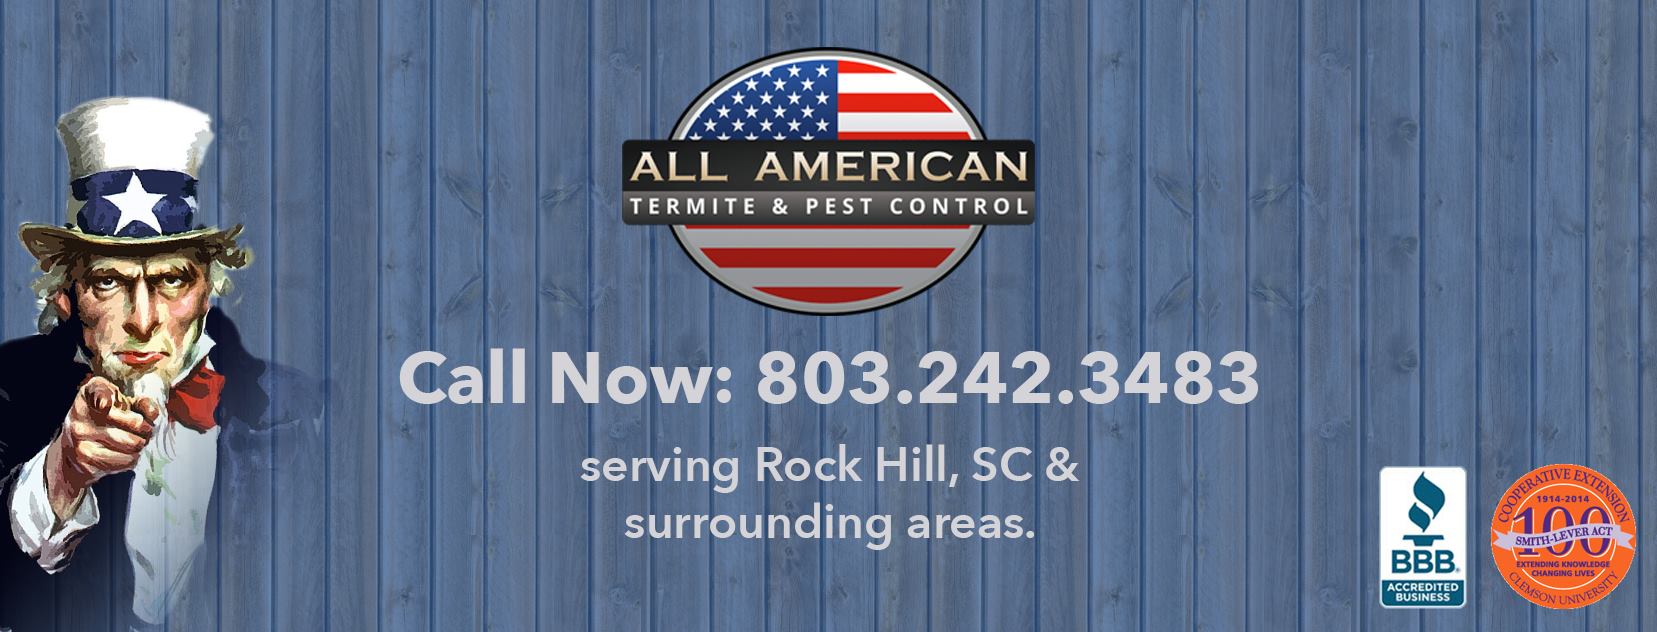 All American Termite & Pest